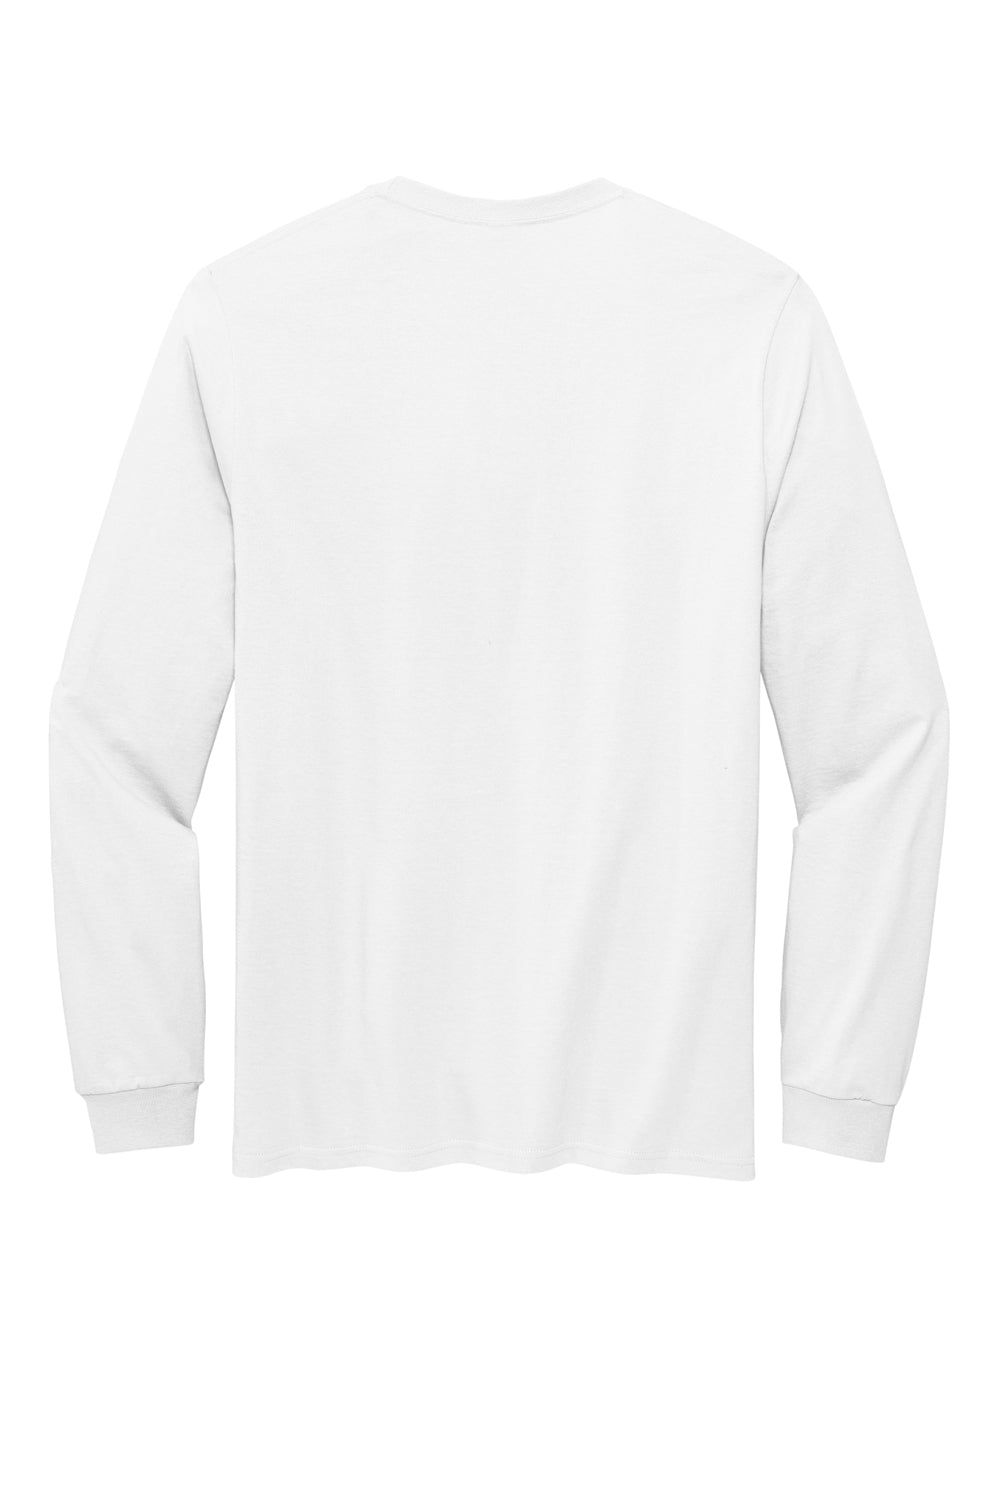 Volunteer Knitwear VL60LS Chore Long Sleeve Crewneck T-Shirt White Flat Back